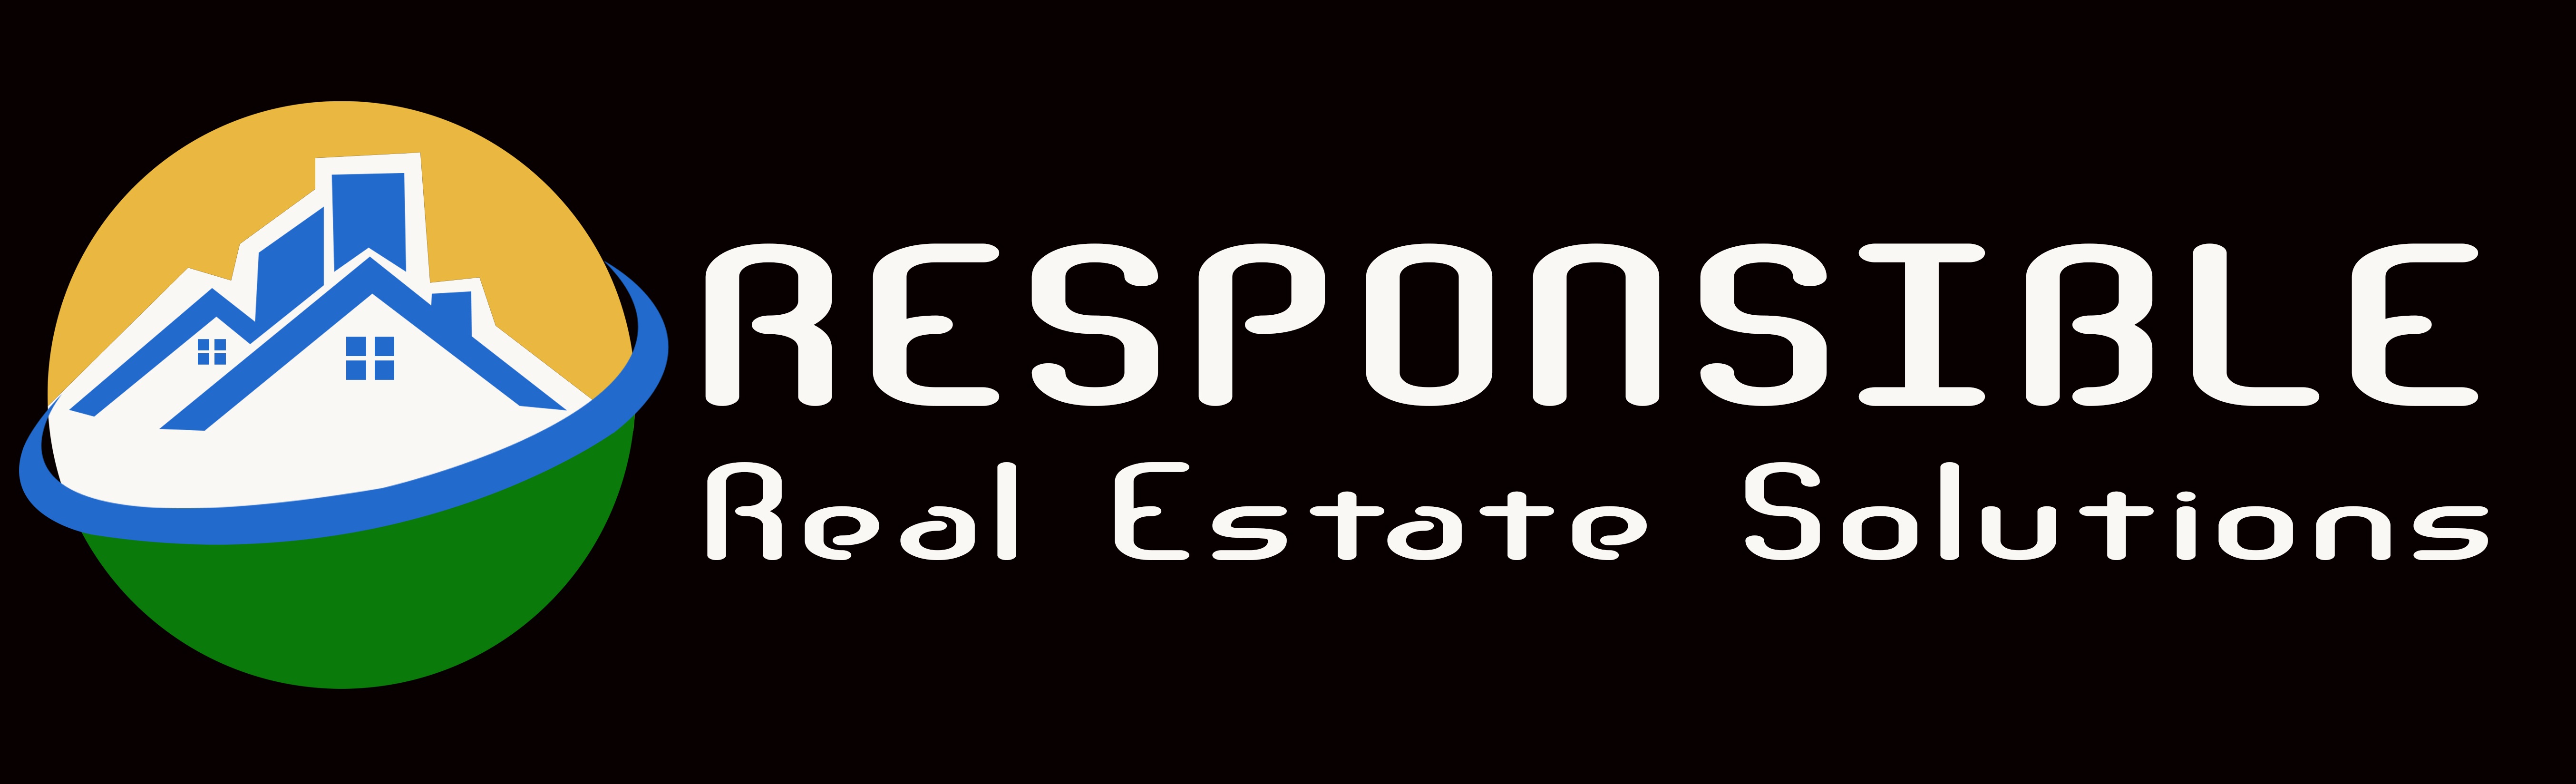 Responsible Real Estate Solutions, LLC